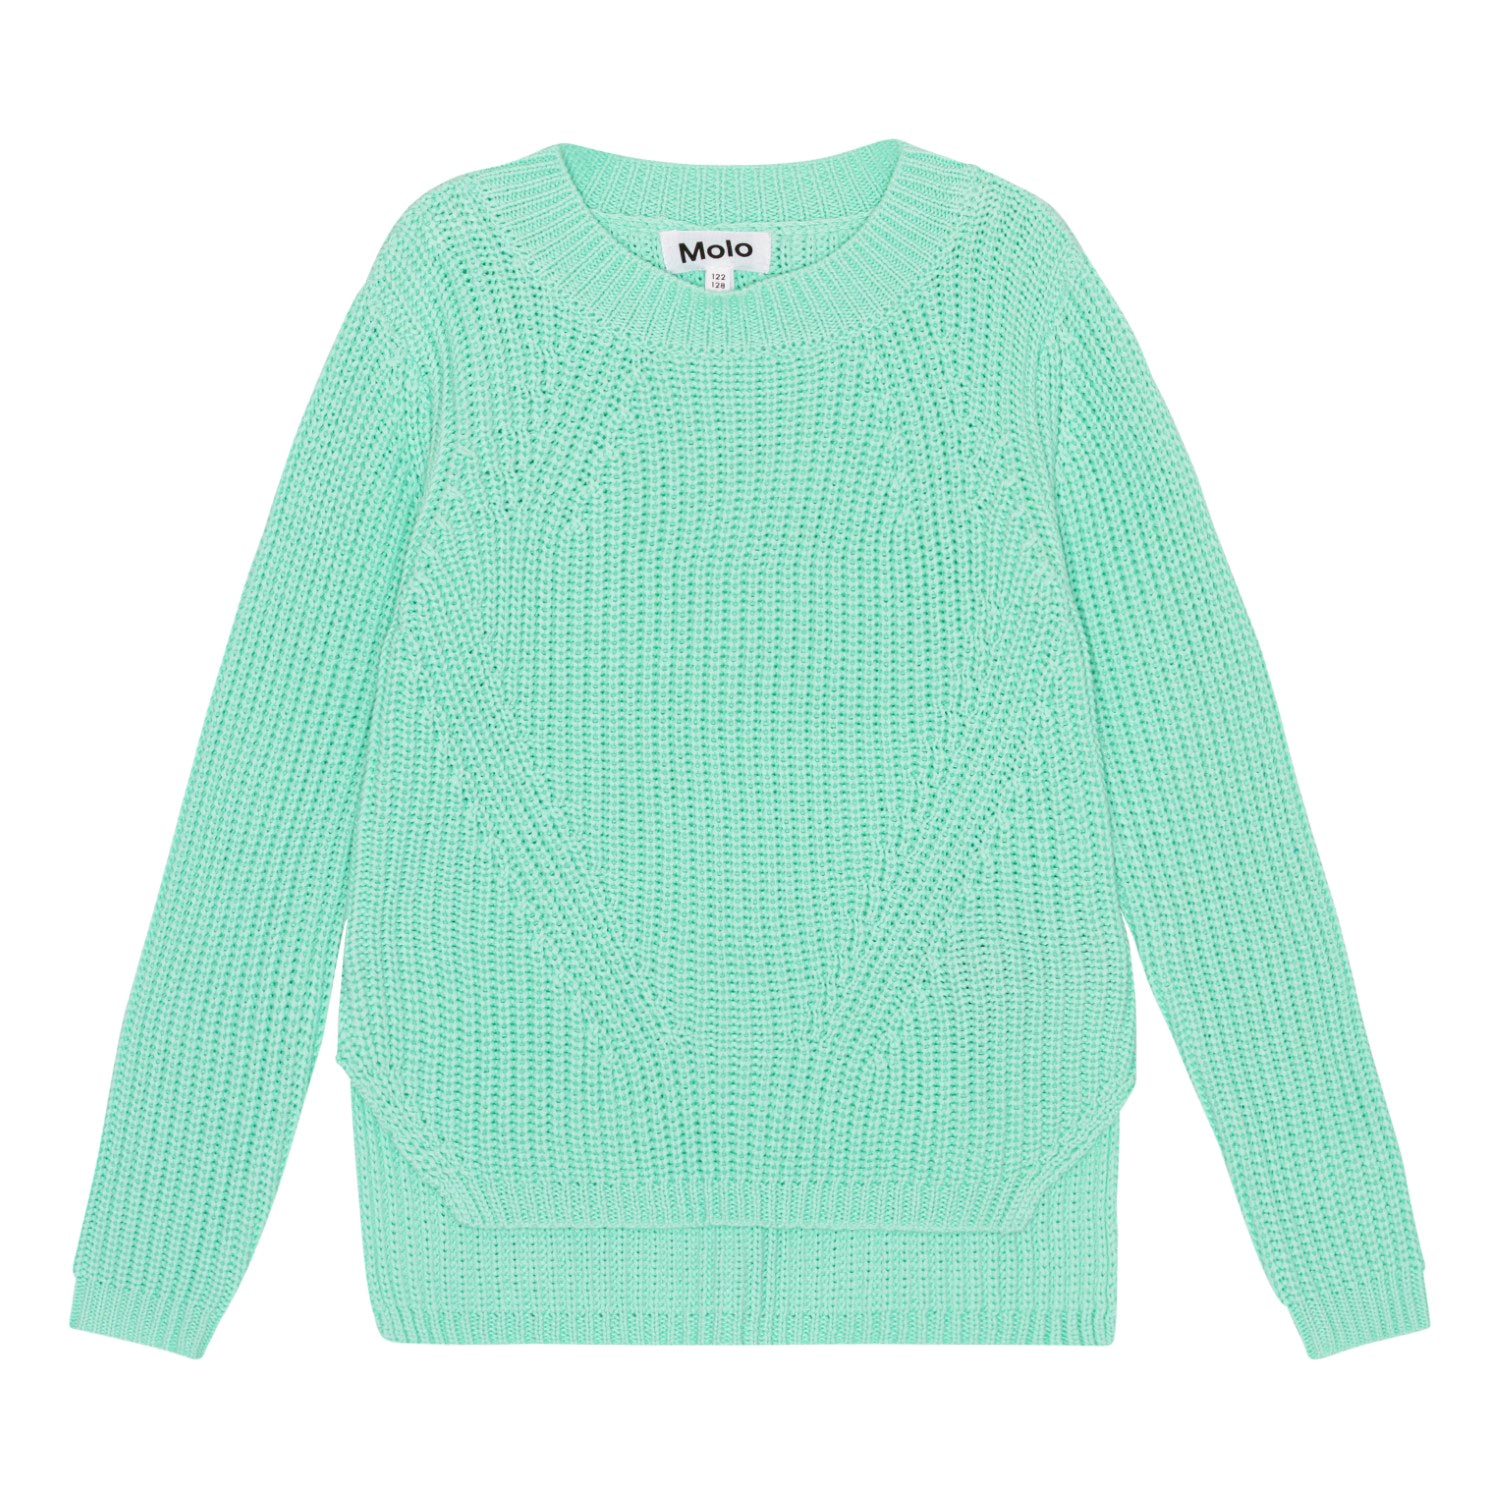 Gillis Cool Mint Sweater